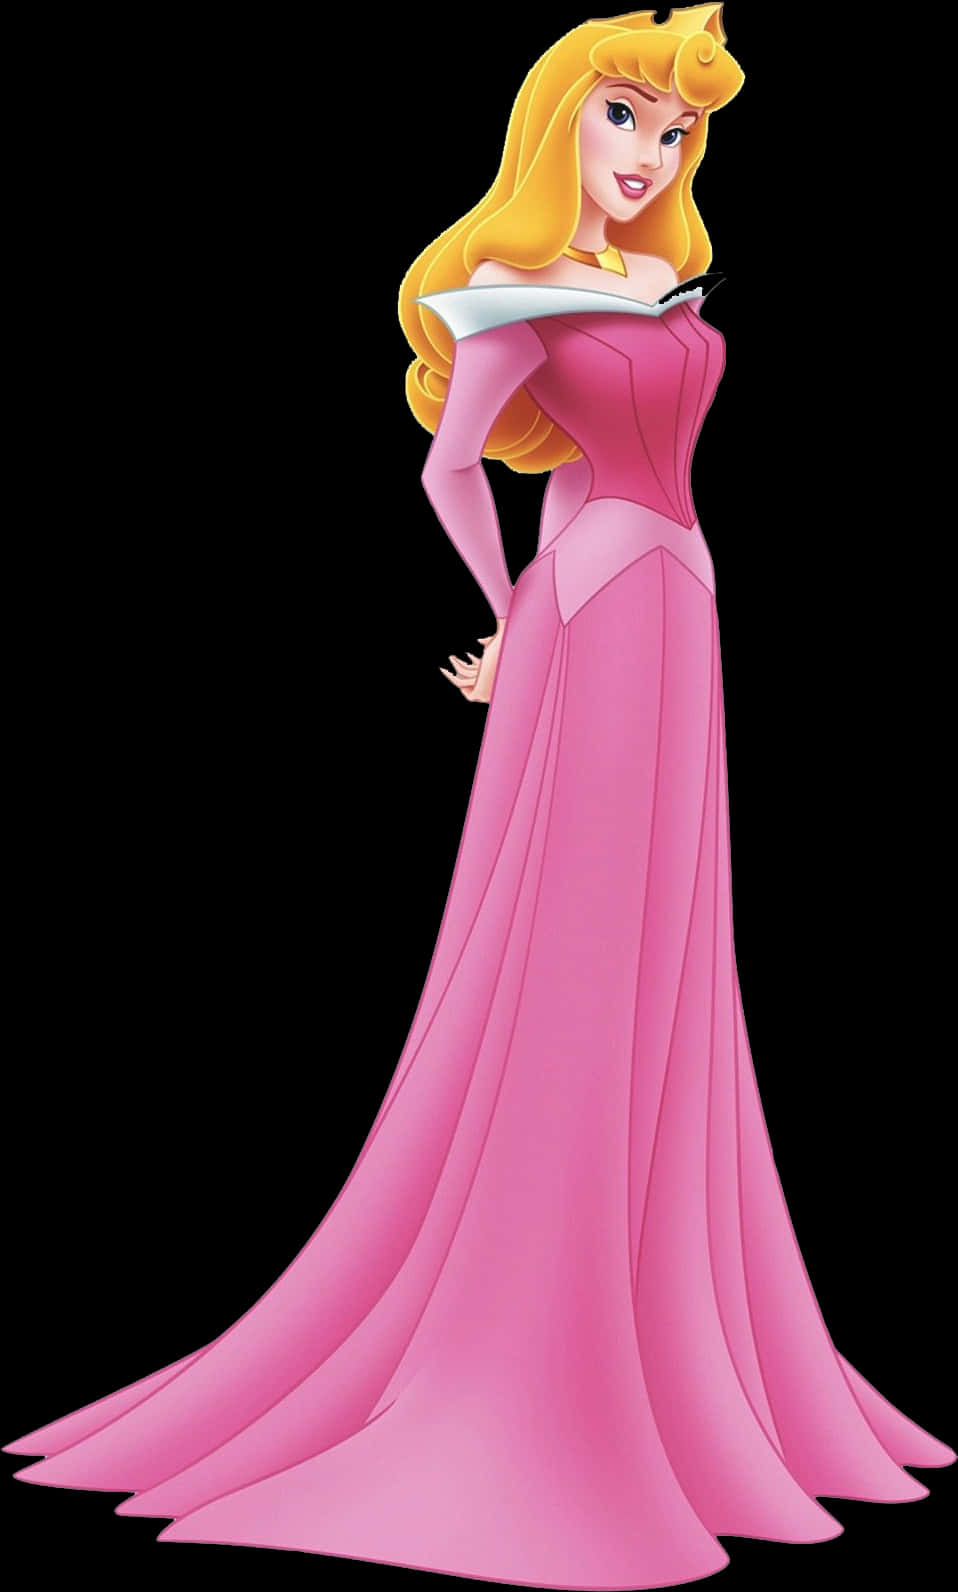 Download Elegant Pink Disney Princess | Wallpapers.com